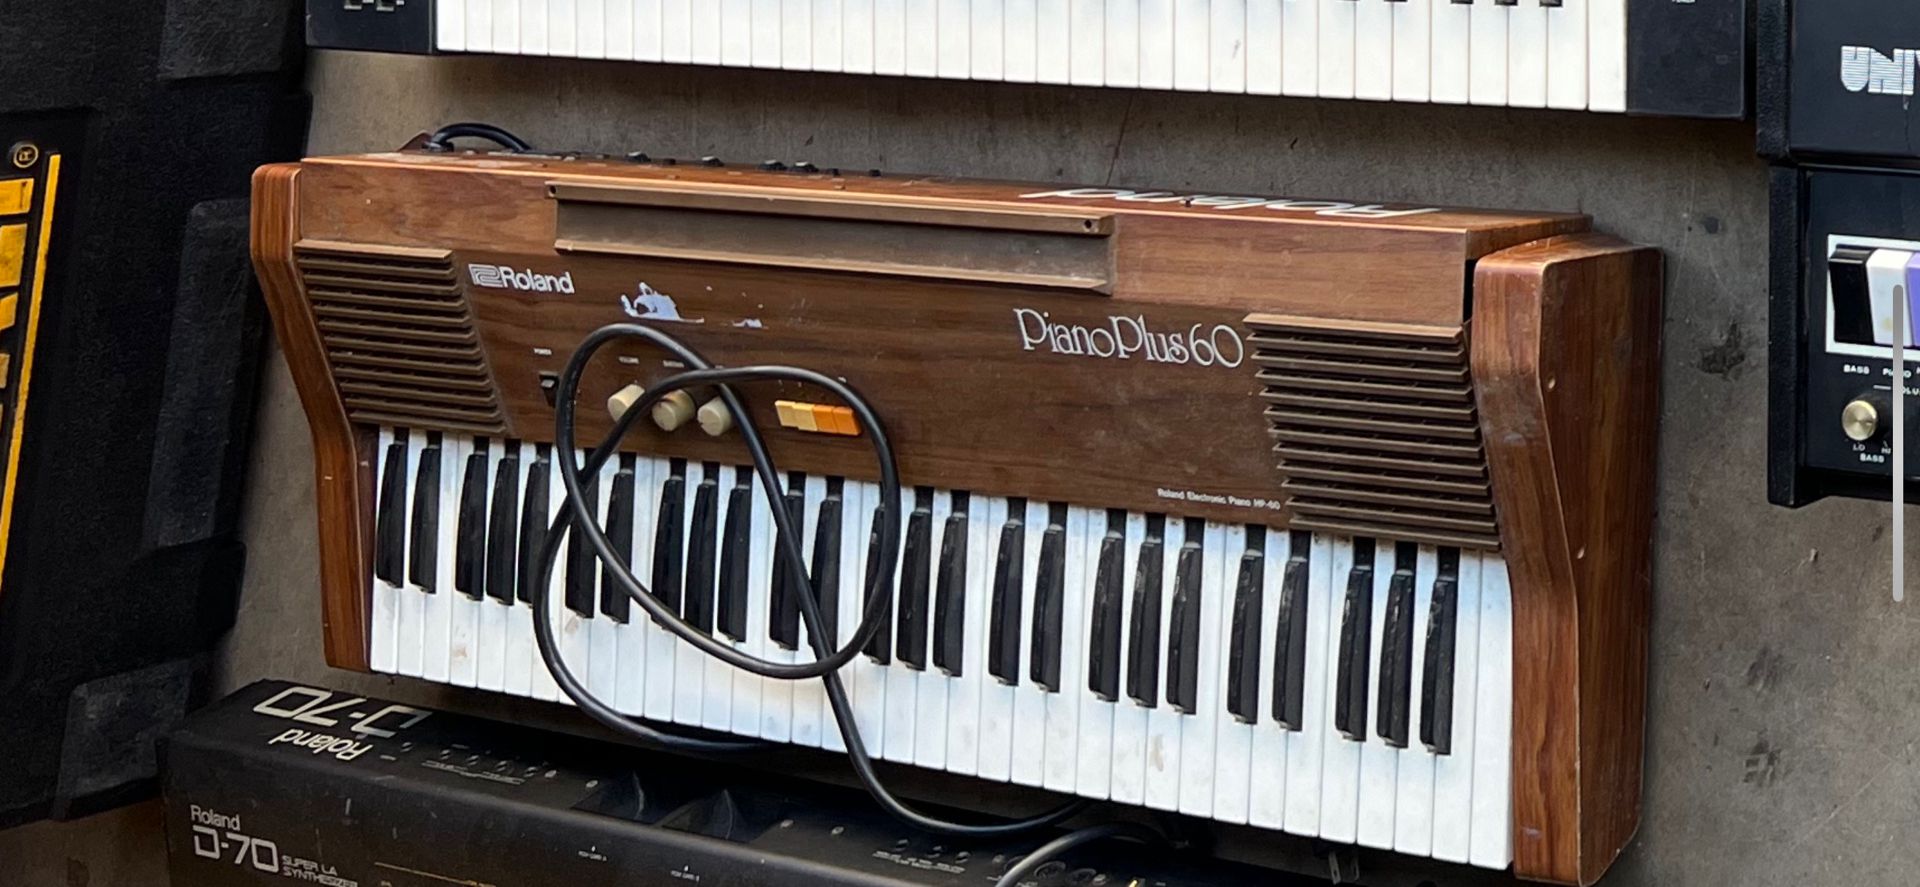 Roland Piano Plus 60 Vintage Keyboard